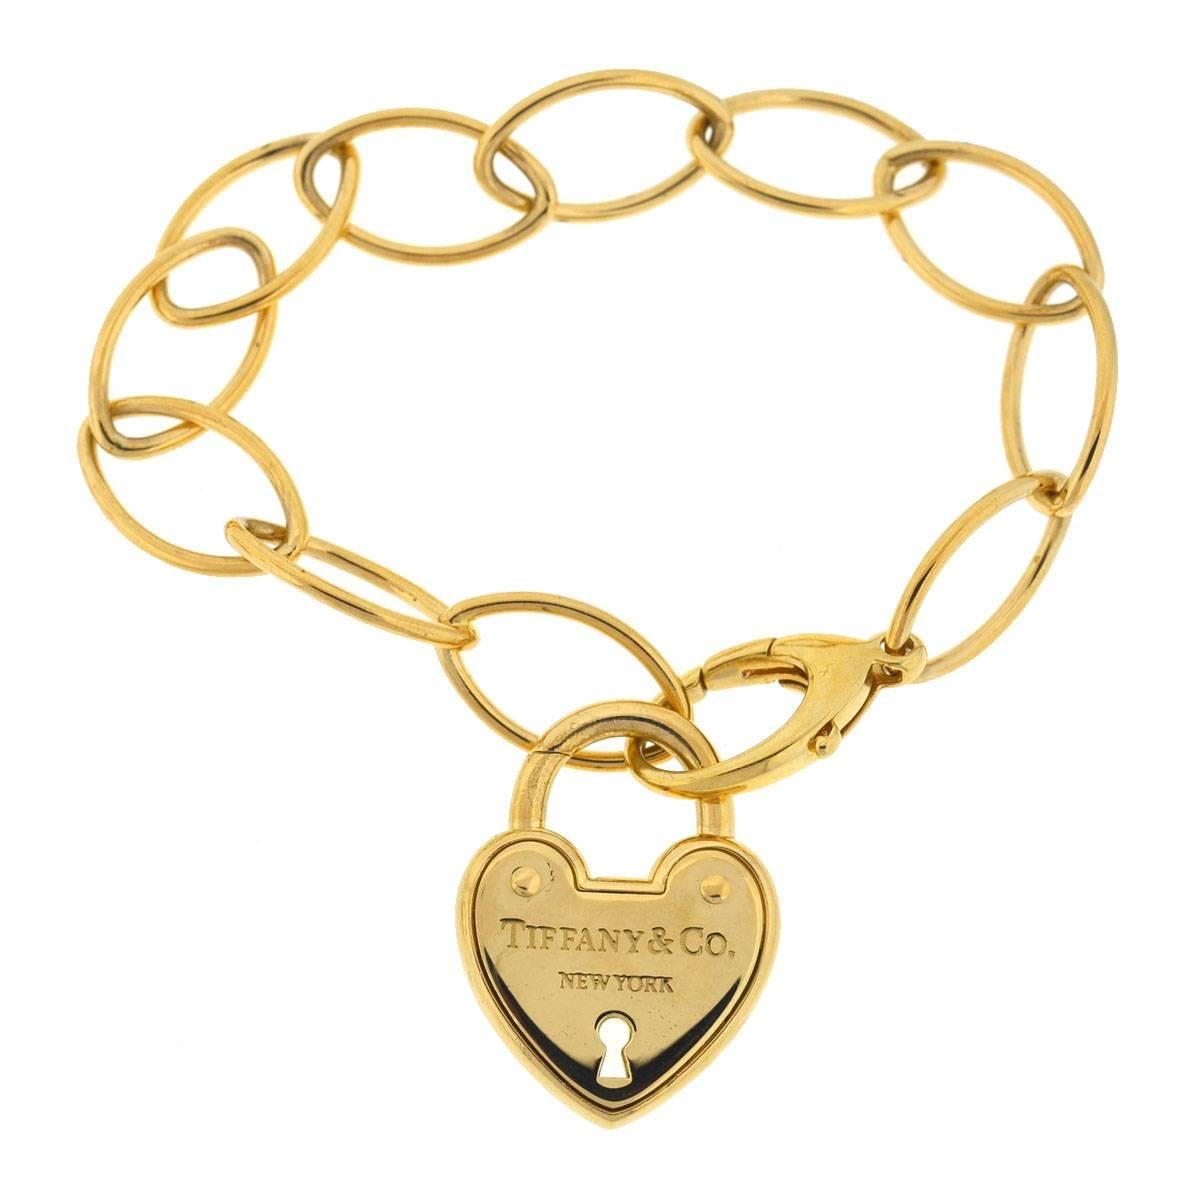 Company - Tiffany & Co
Style - Link Heart Lock 
Metal - 18k Yellow gold
Length- 7